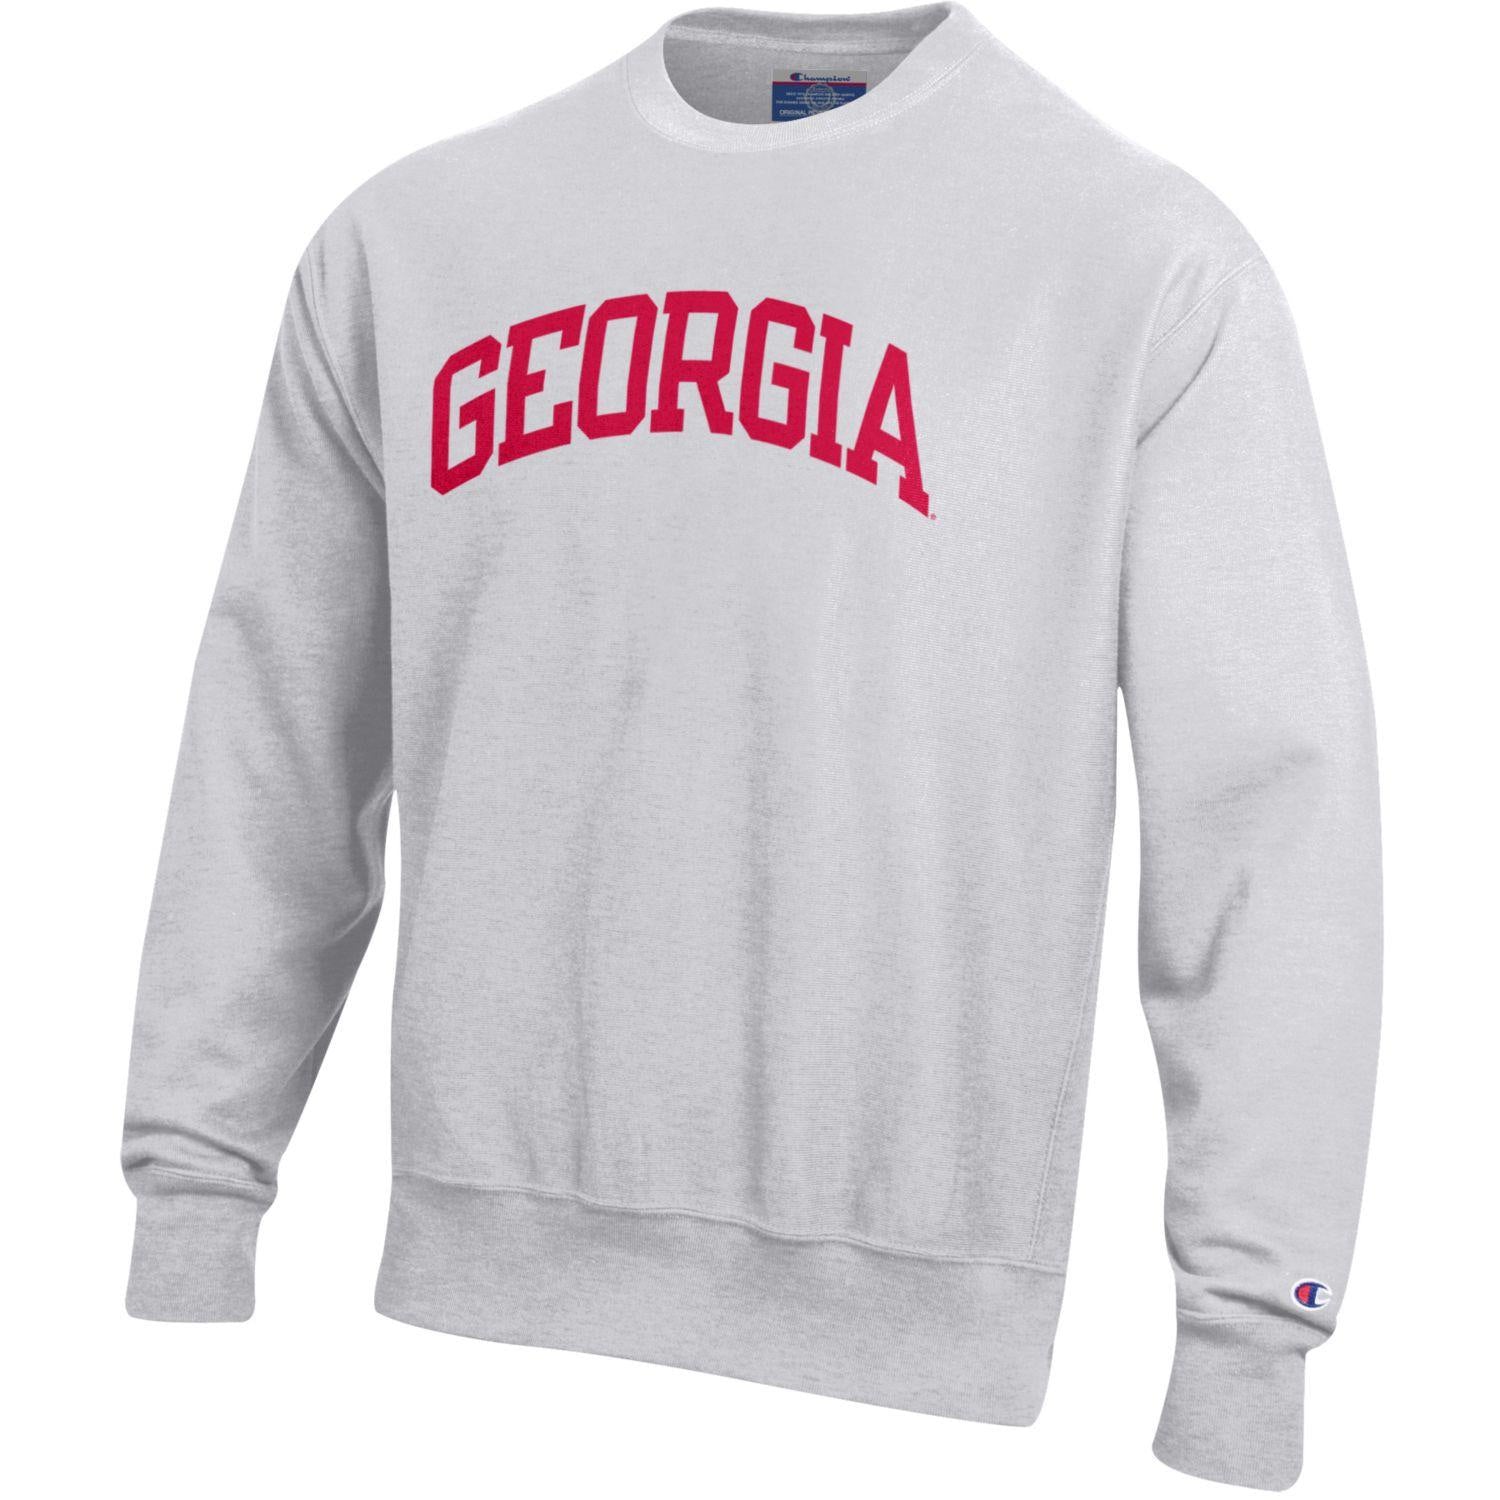 Georgia Bulldogs Champion Reverse Weave Sweater